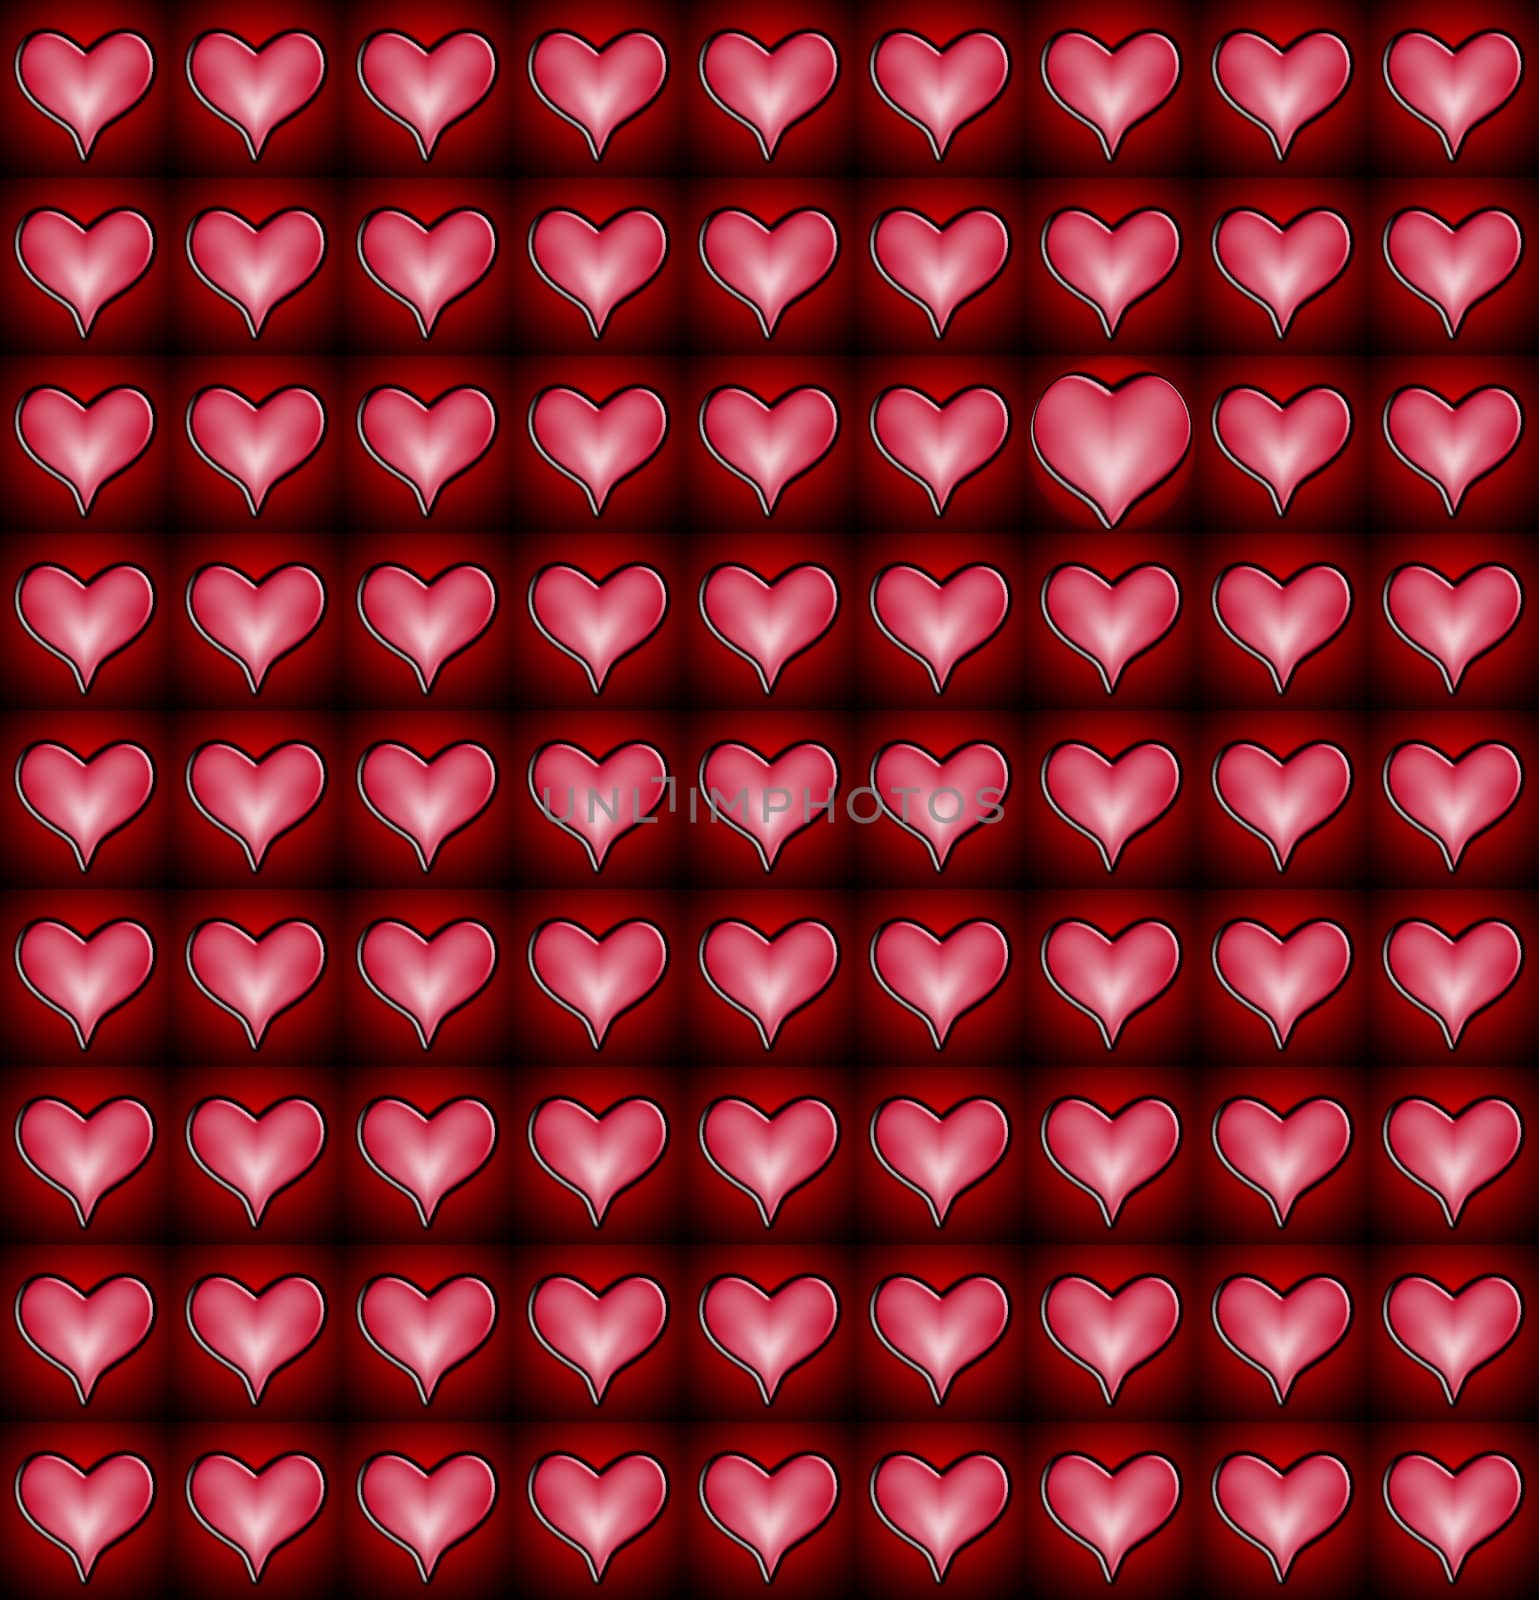 Heart Pattern Odd One Out by harveysart